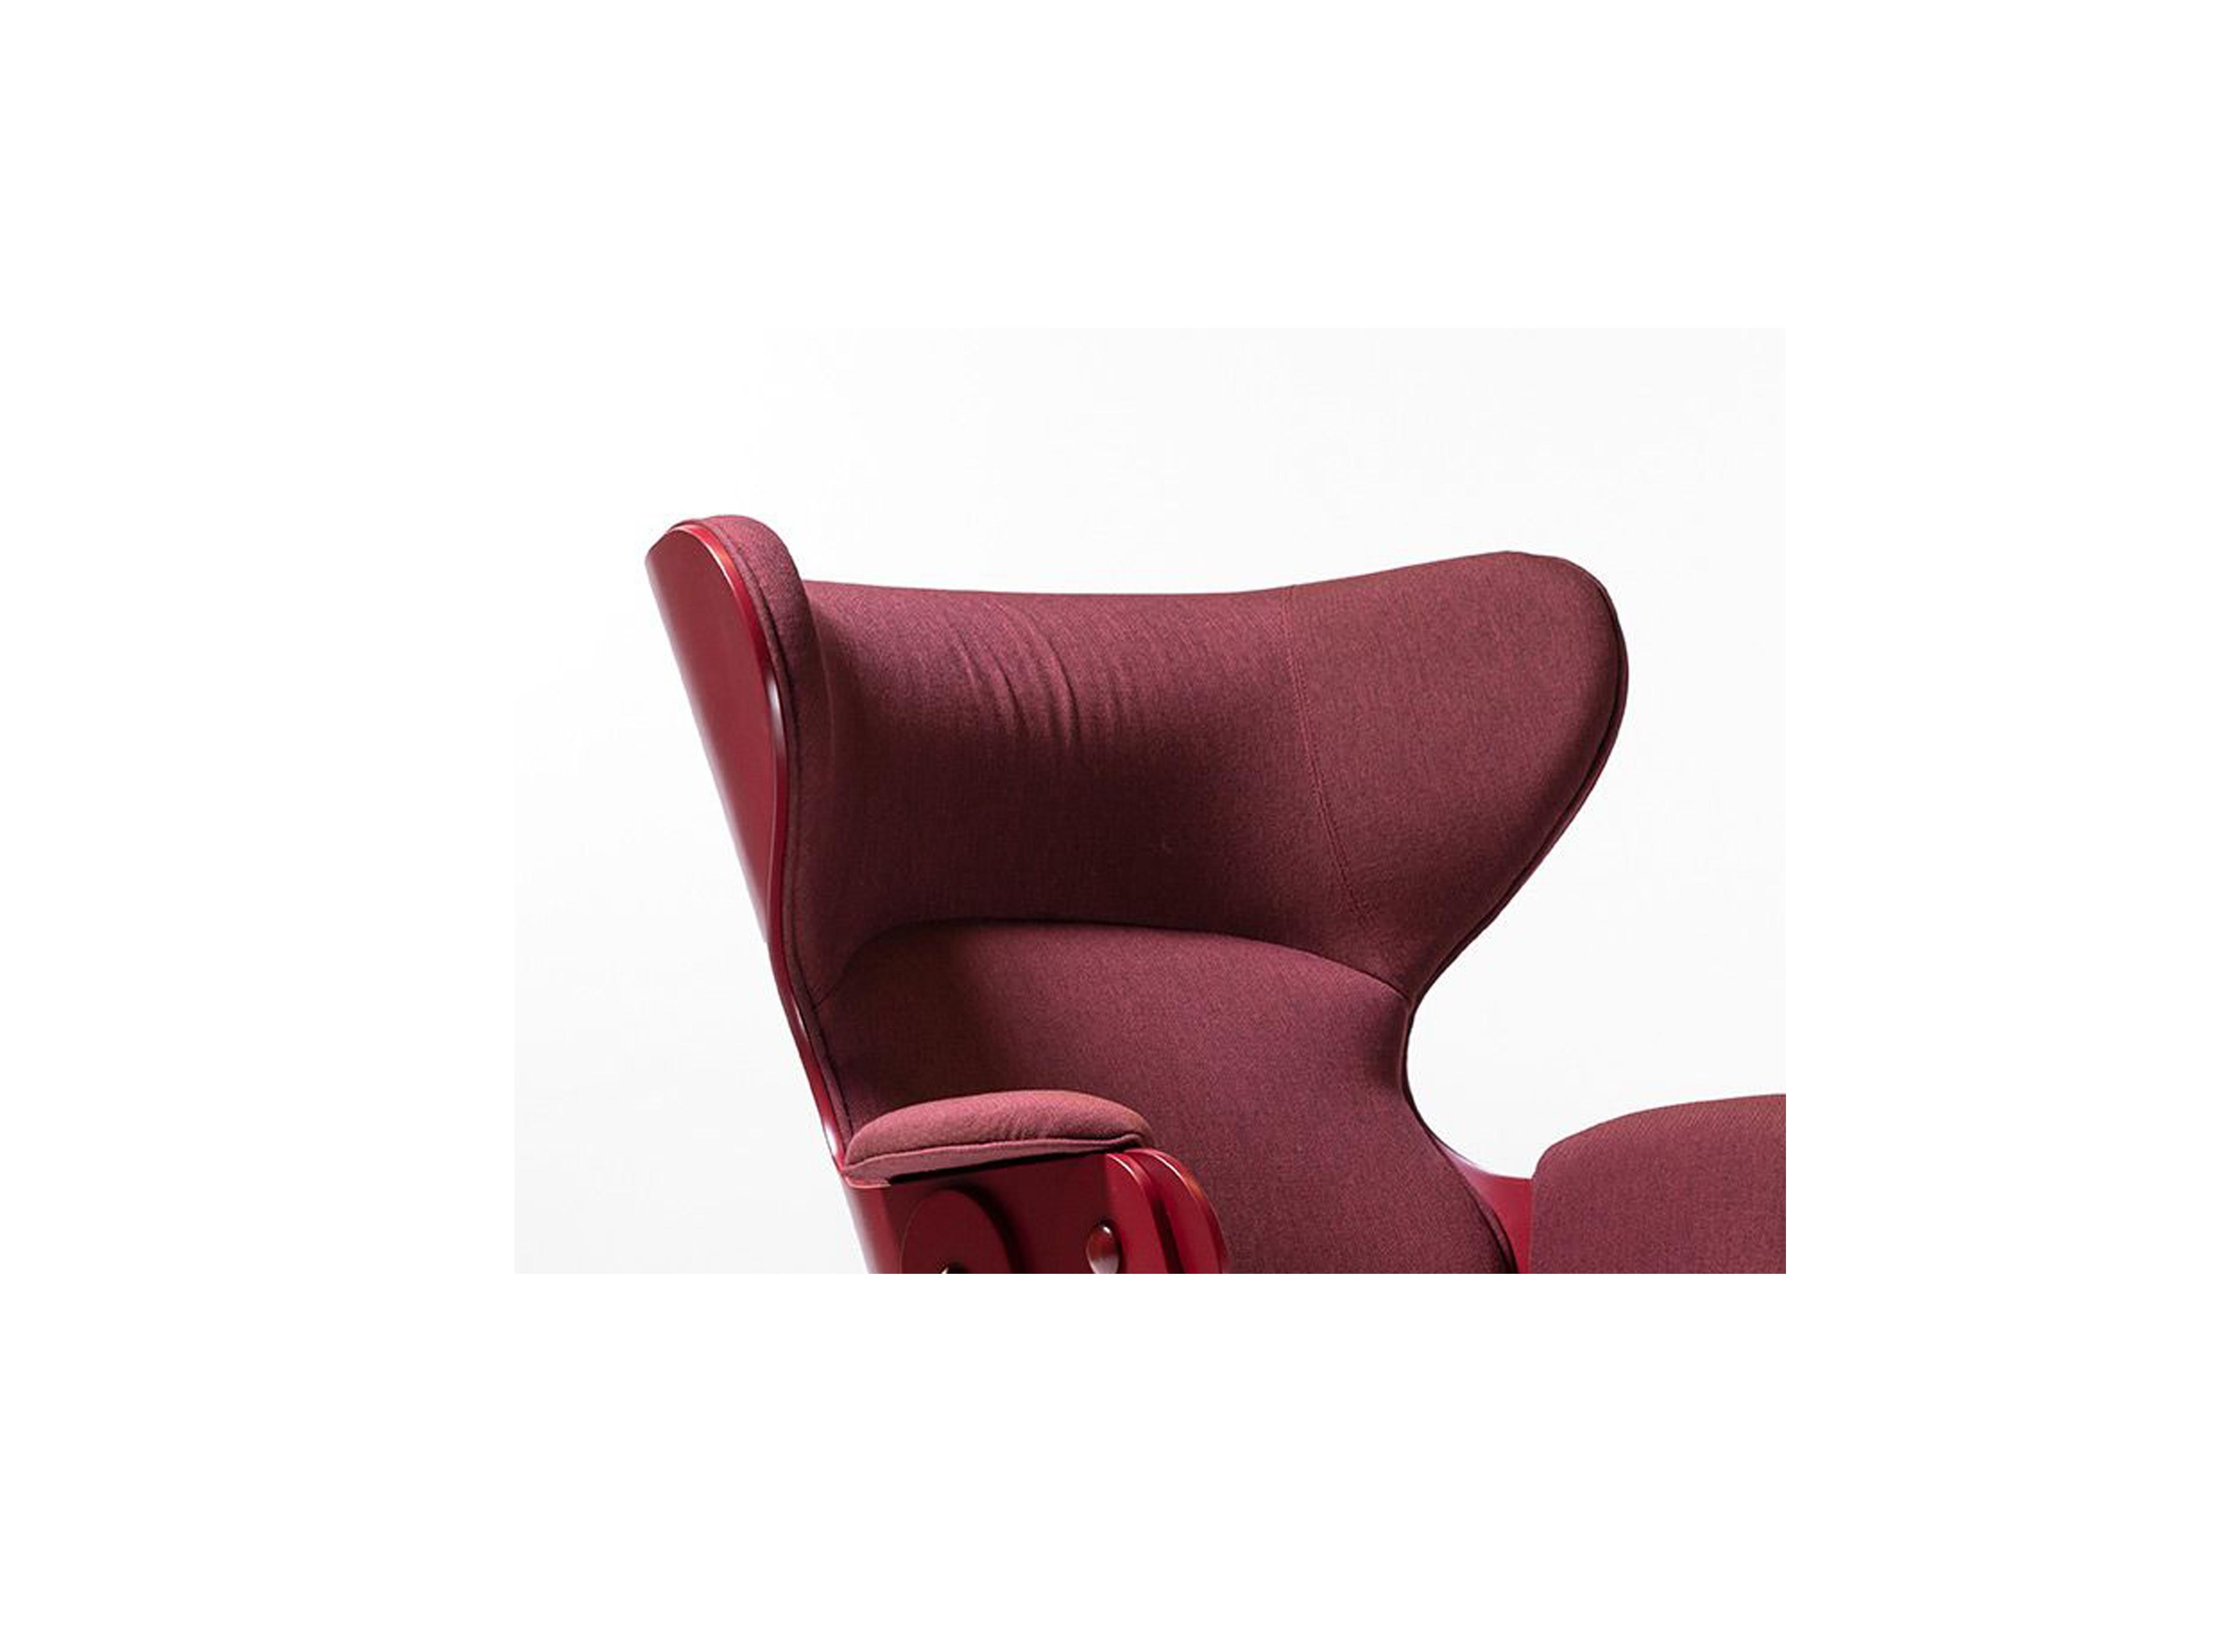 Spanish Jaime Hayon, Contemporary, Playwood Walnut Granet Upholstery Lounger Armchair